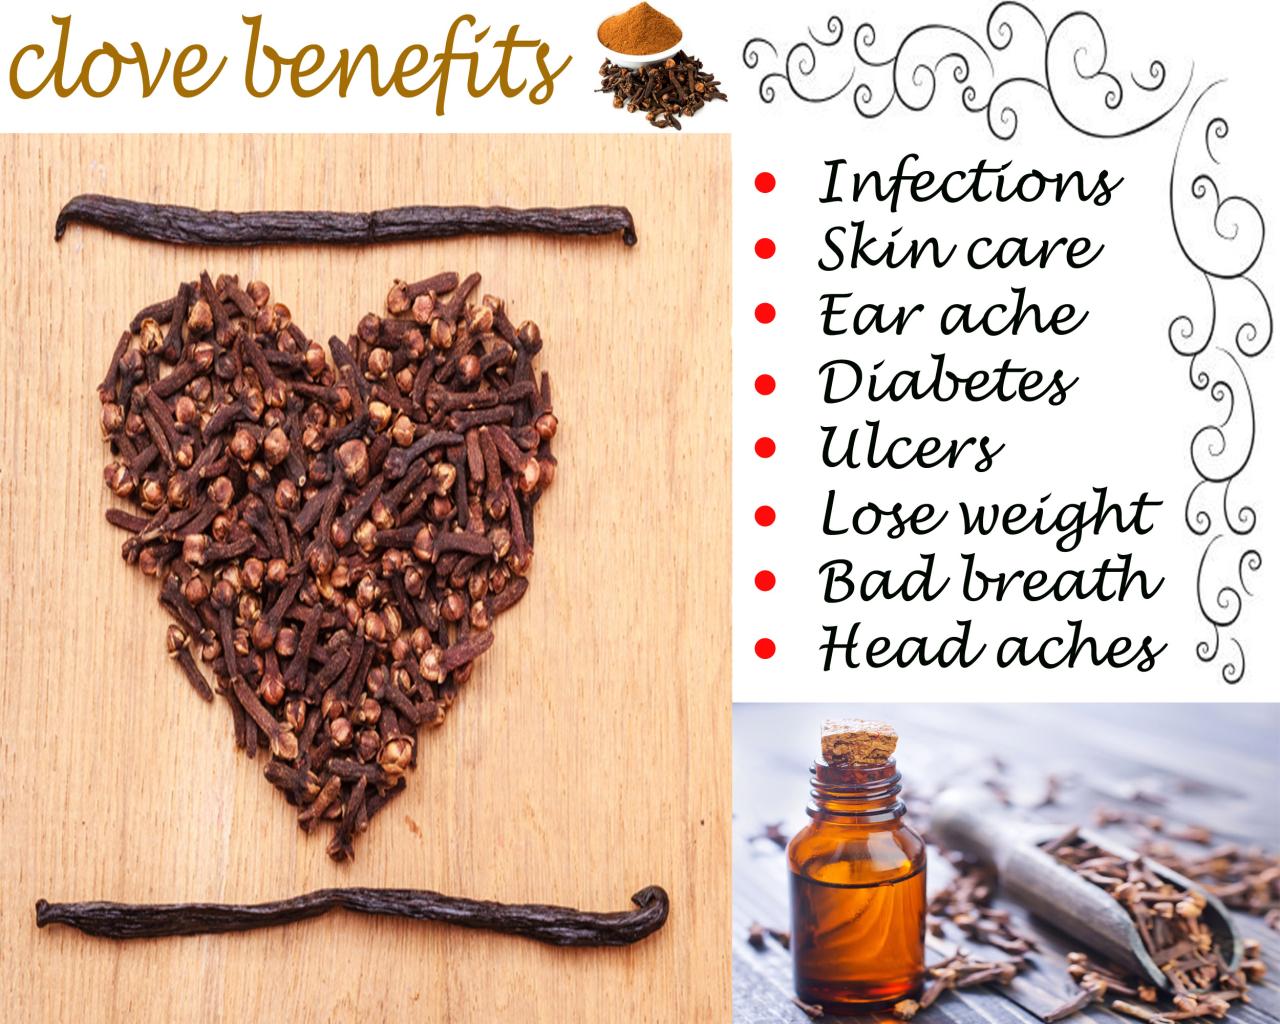 Cloves benefits clove tea health remedies whole recipes cinnamon natural choose board ingredients